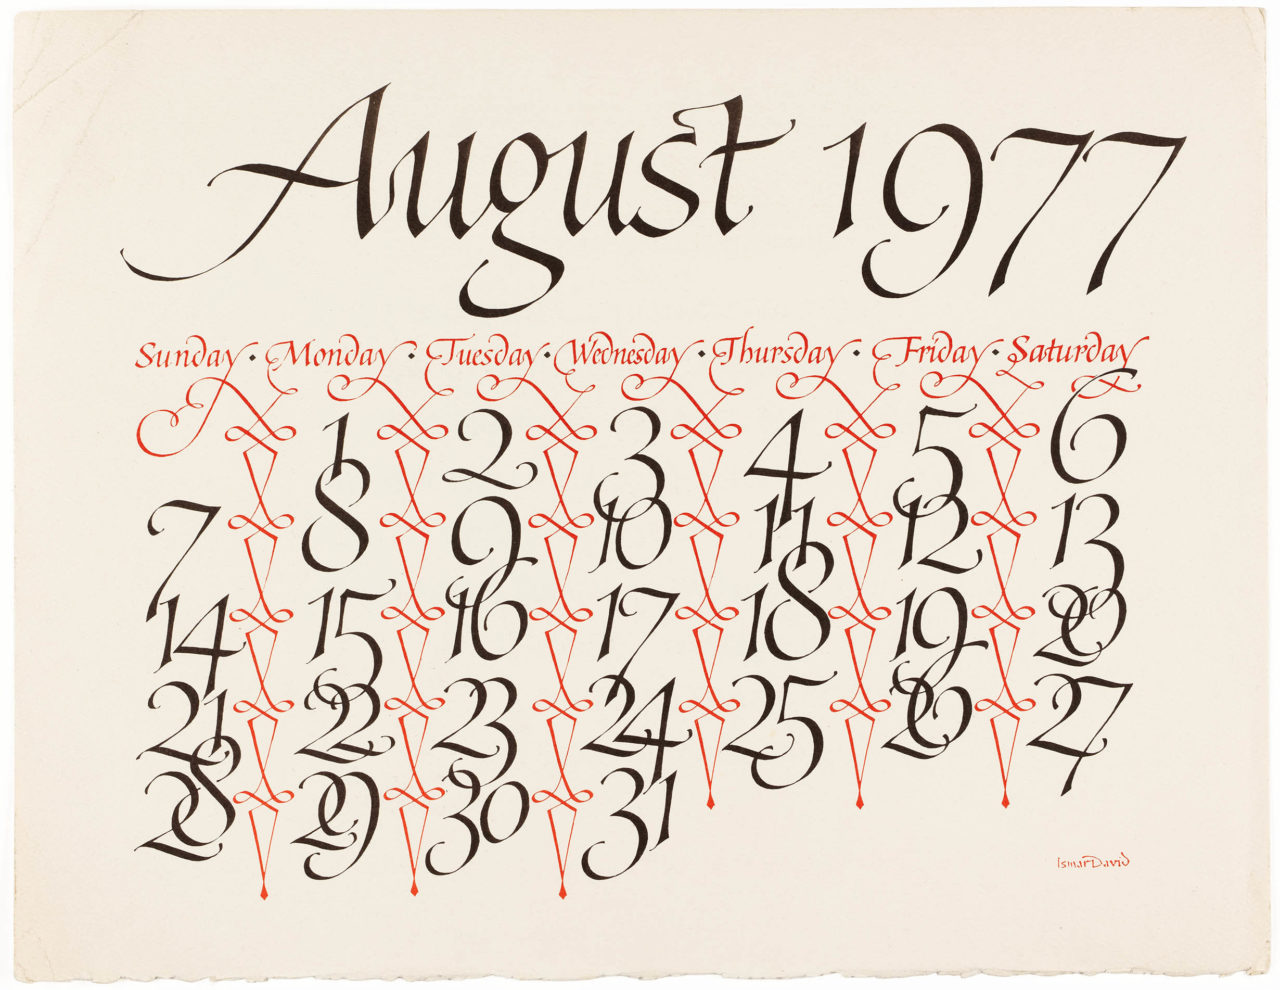 Society of Scribes calendar, 1977